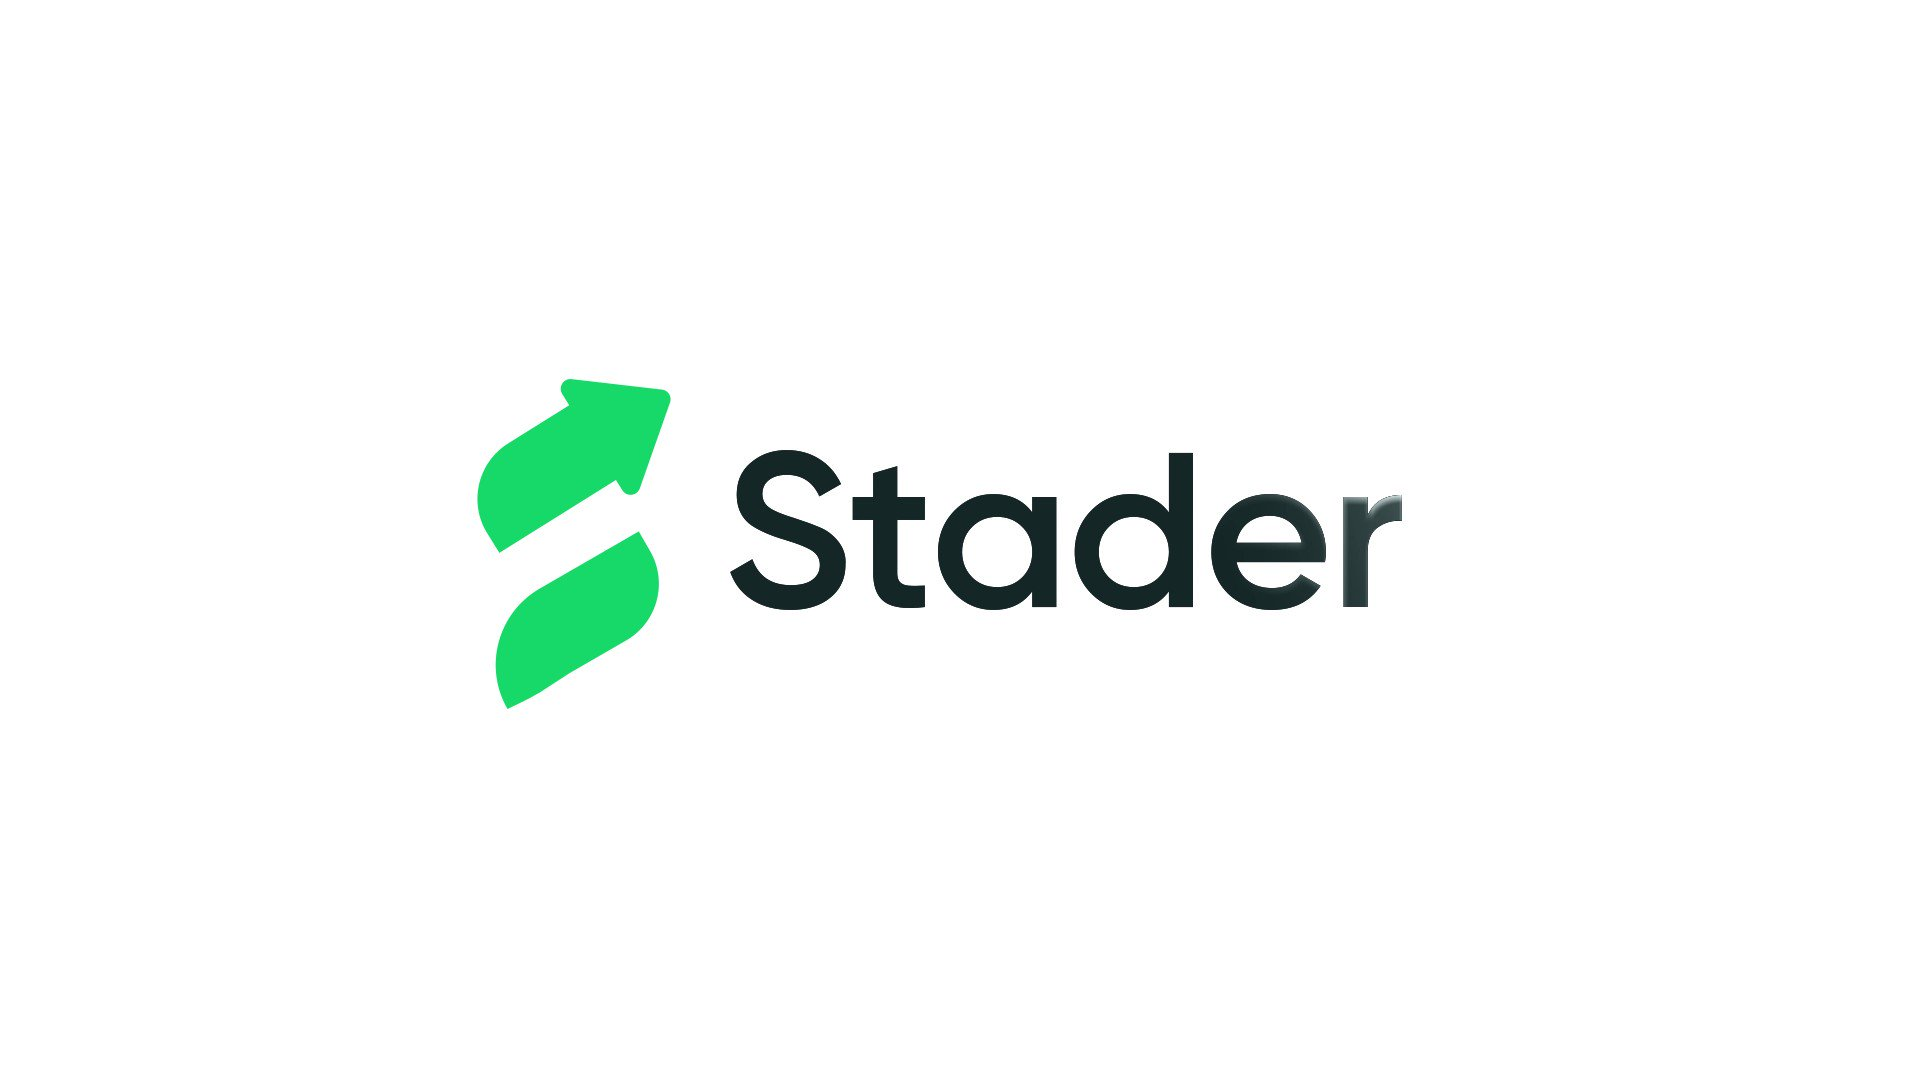 Stader Labs